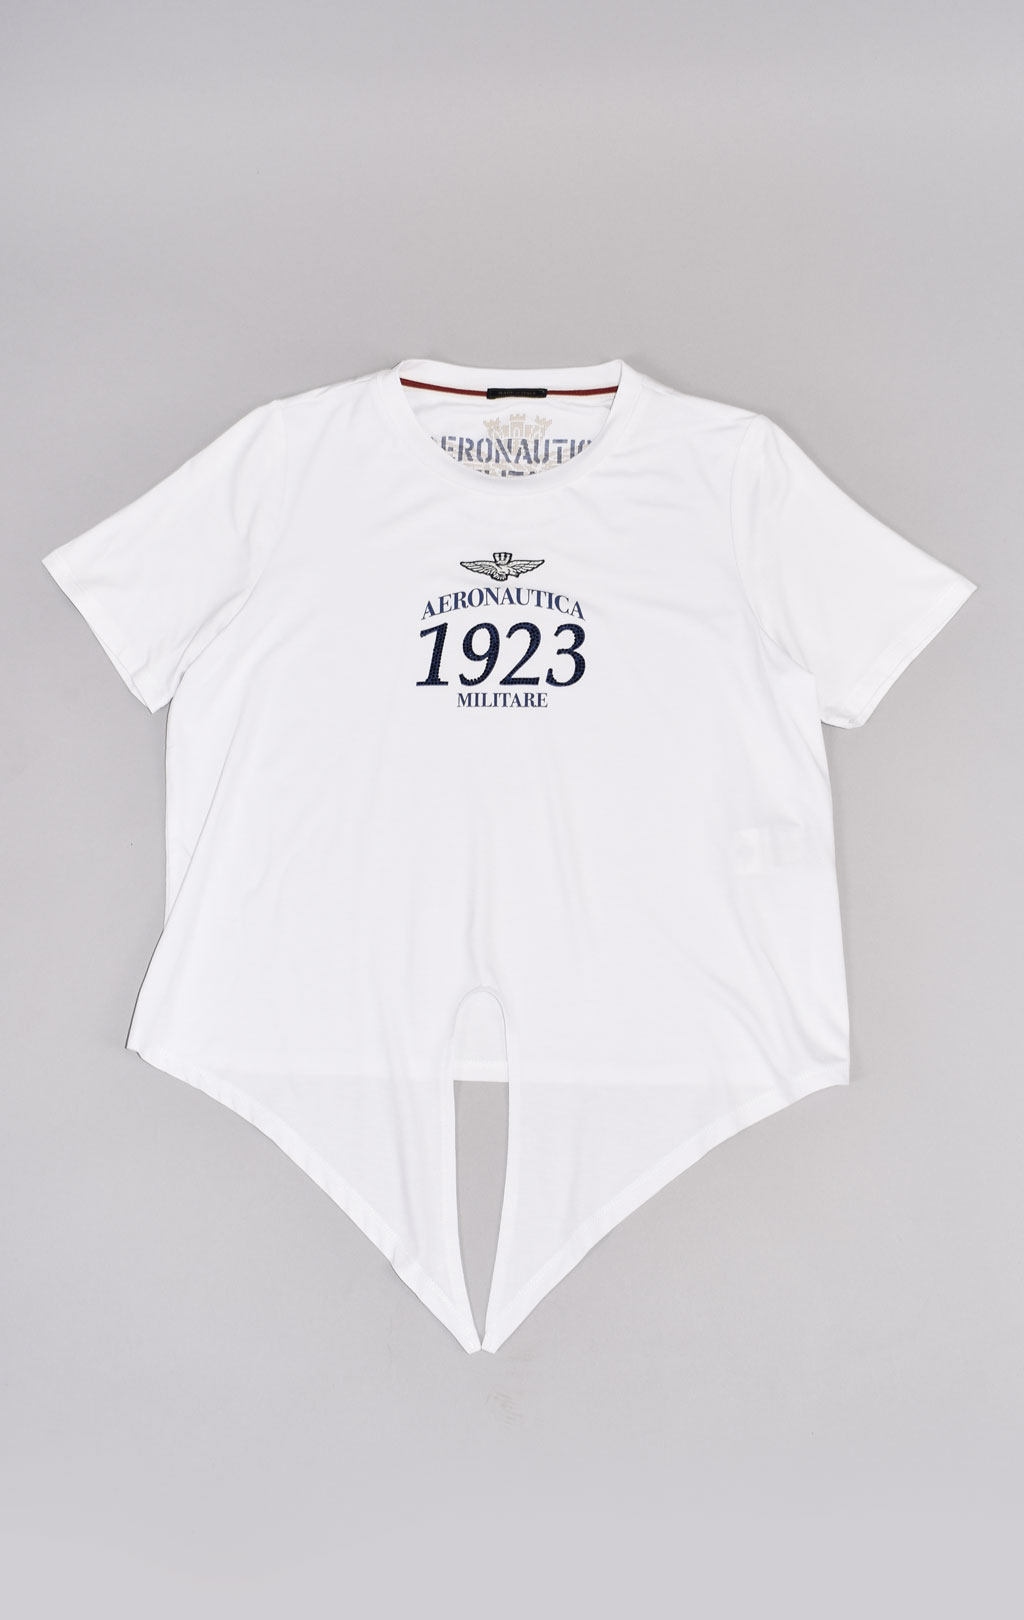 Женская футболка AERONAUTICA MILITARE SS 22/IT bianco ottico (TS 1985) 